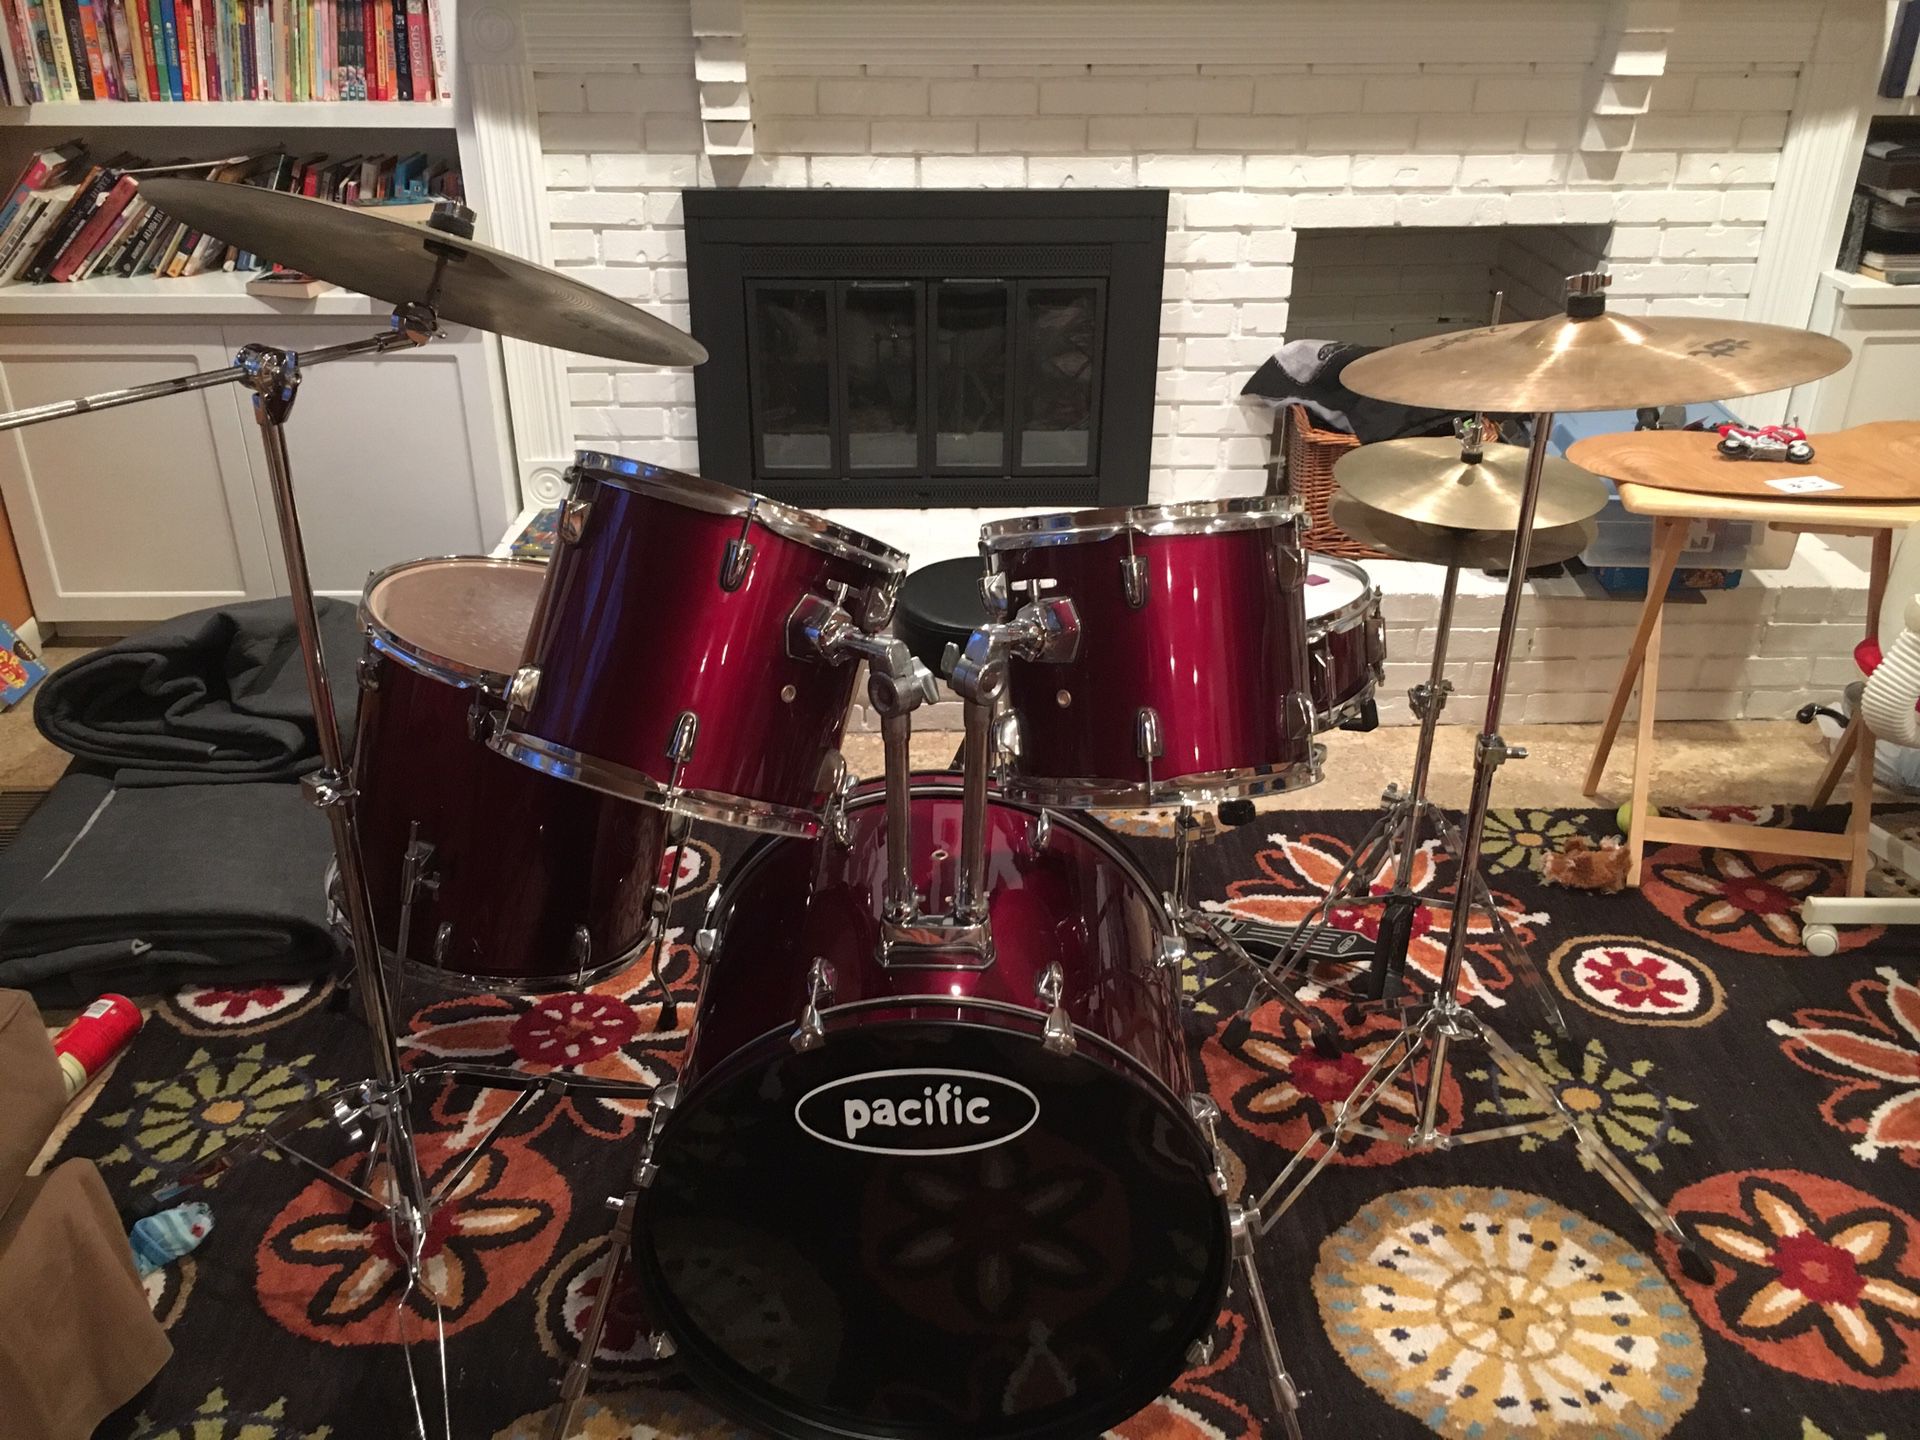 Pacific 5 piece drum set with hi-hat, 18” crash ride, 21” ride